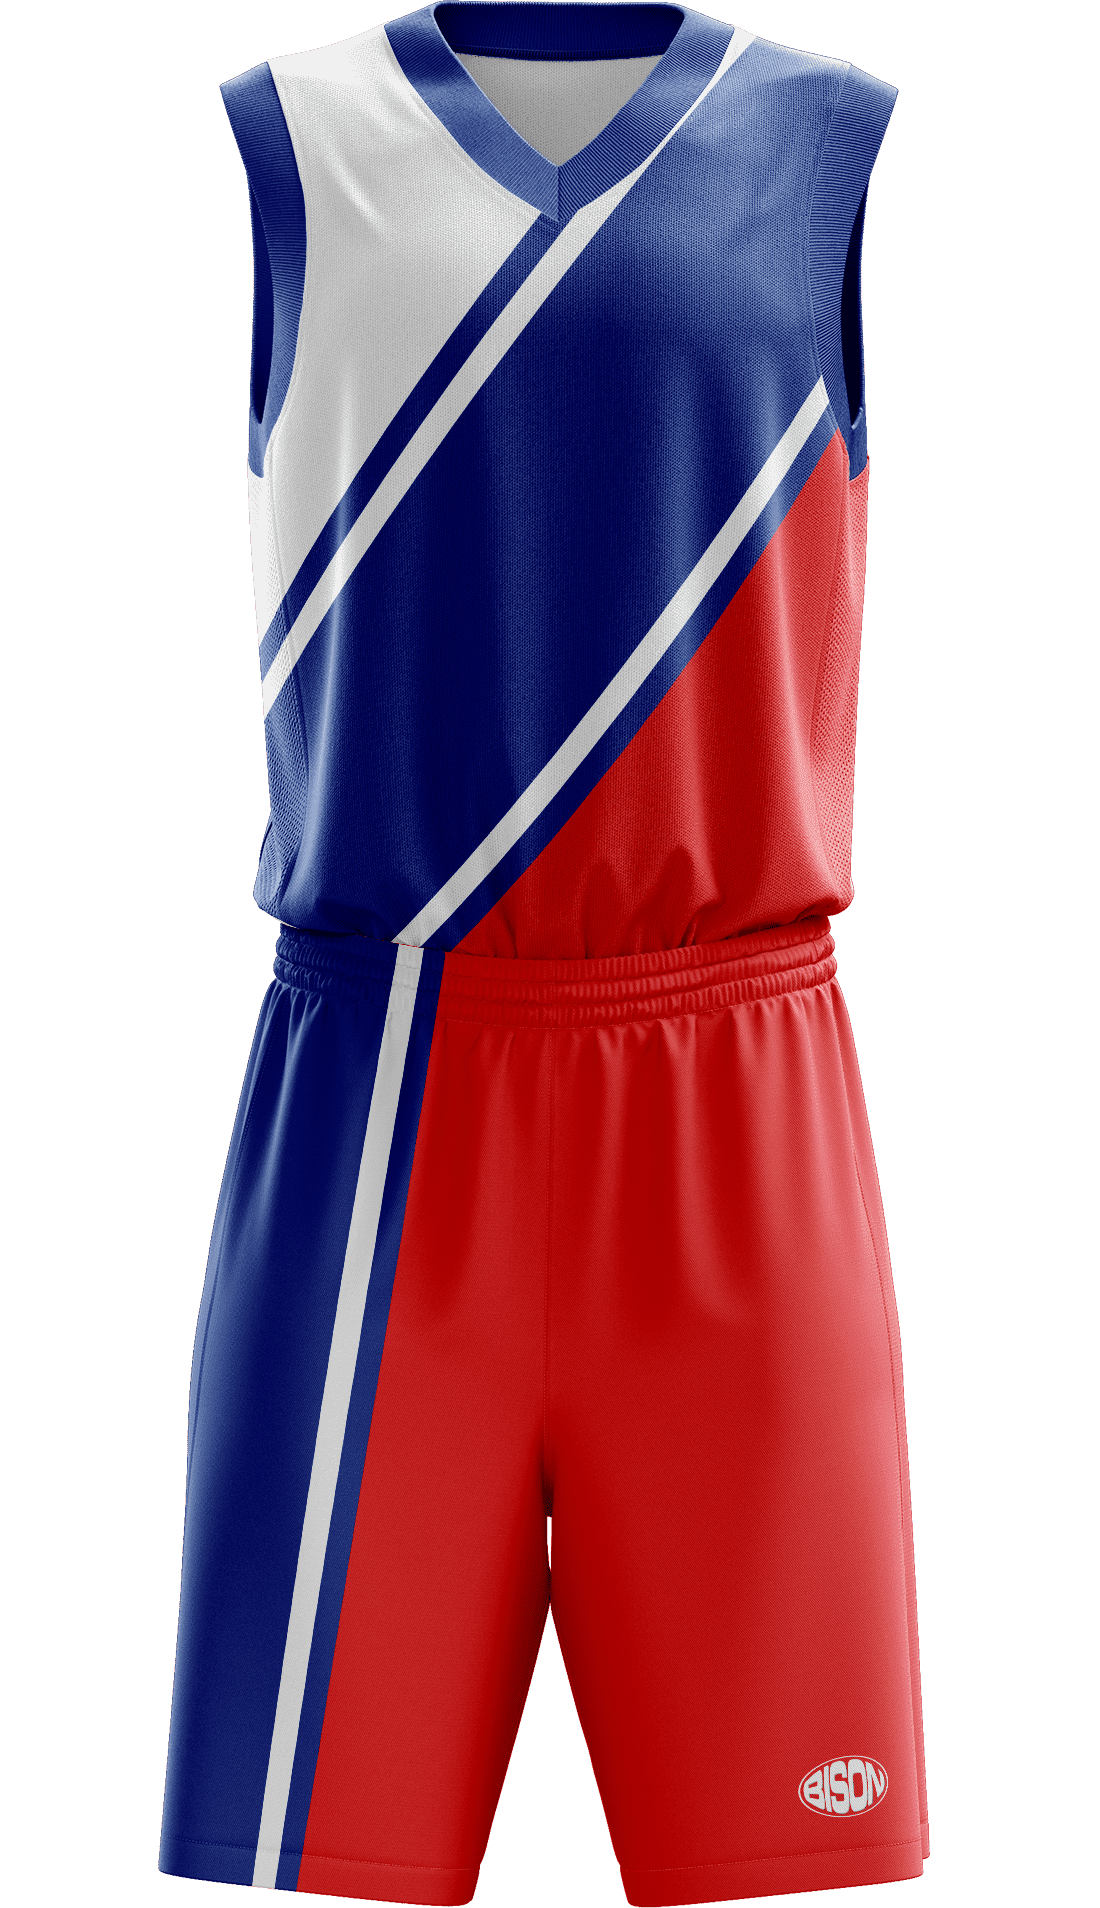 Basketball jerseys, shorts, overalls